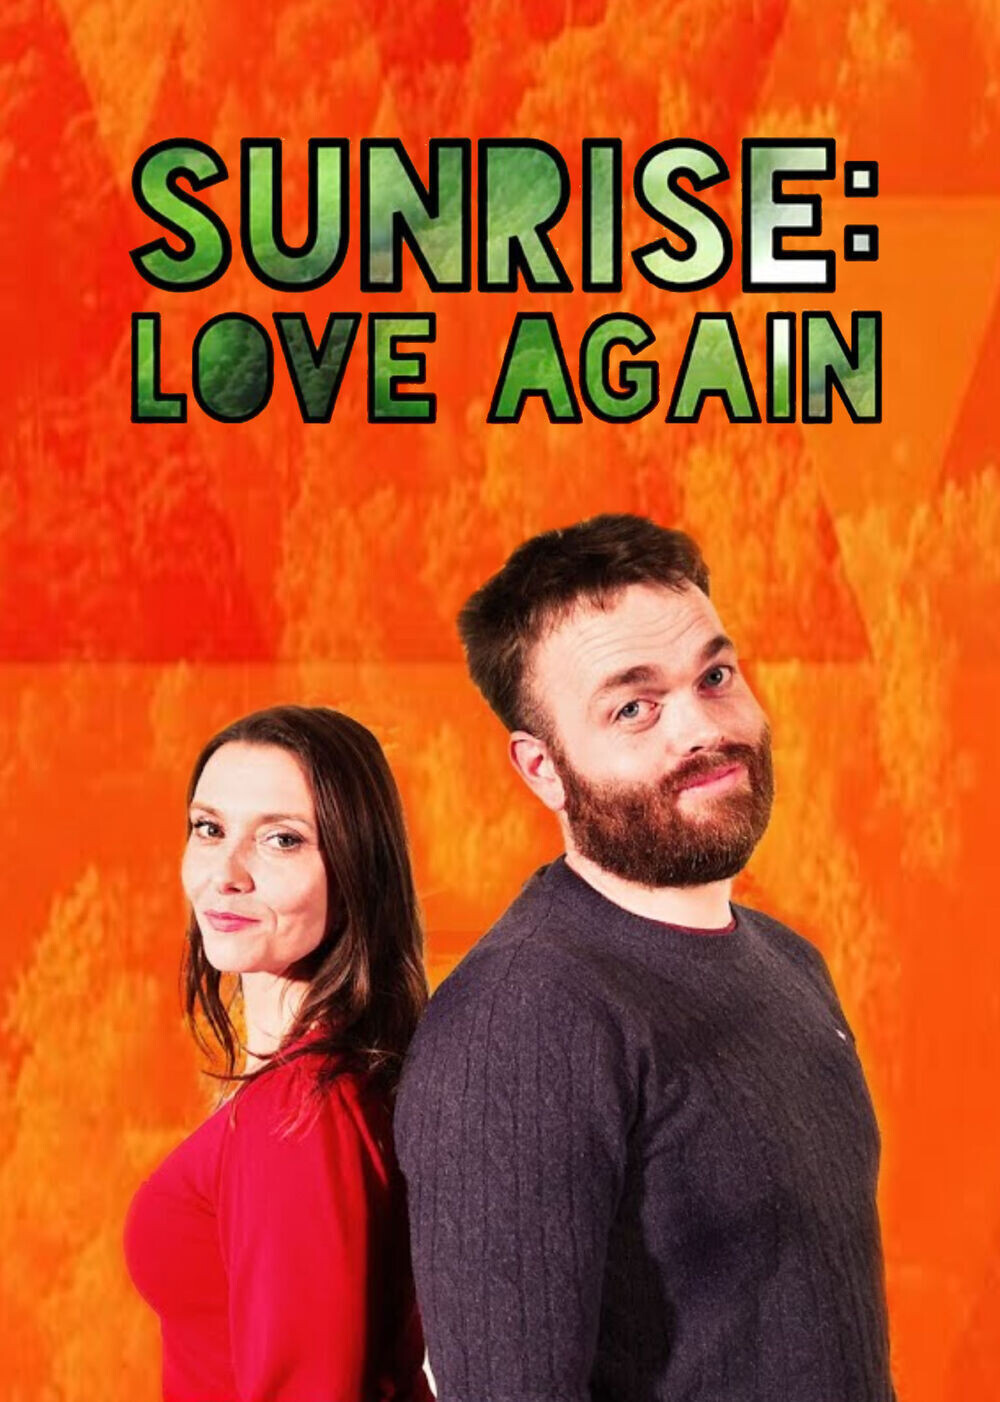 BBV Sunrise: Love Again - a Romantic Comedy (FILM DOWNLOAD)